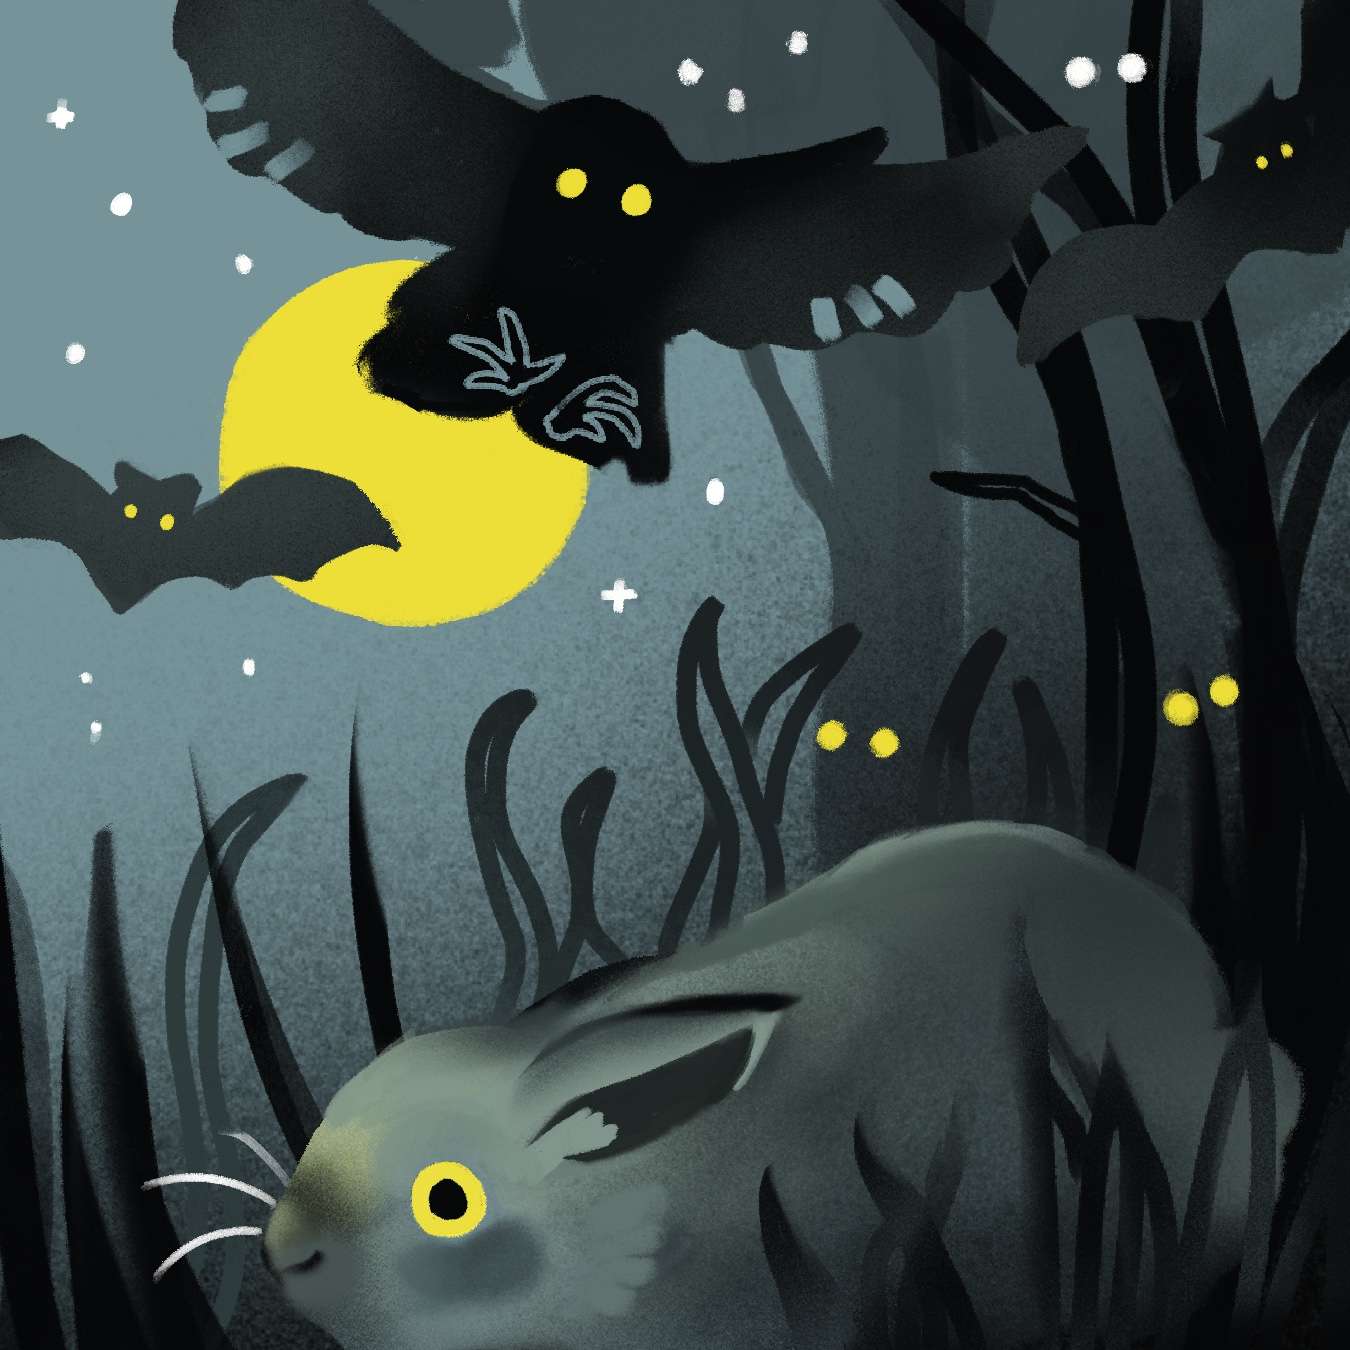 rabbit and bird illustration